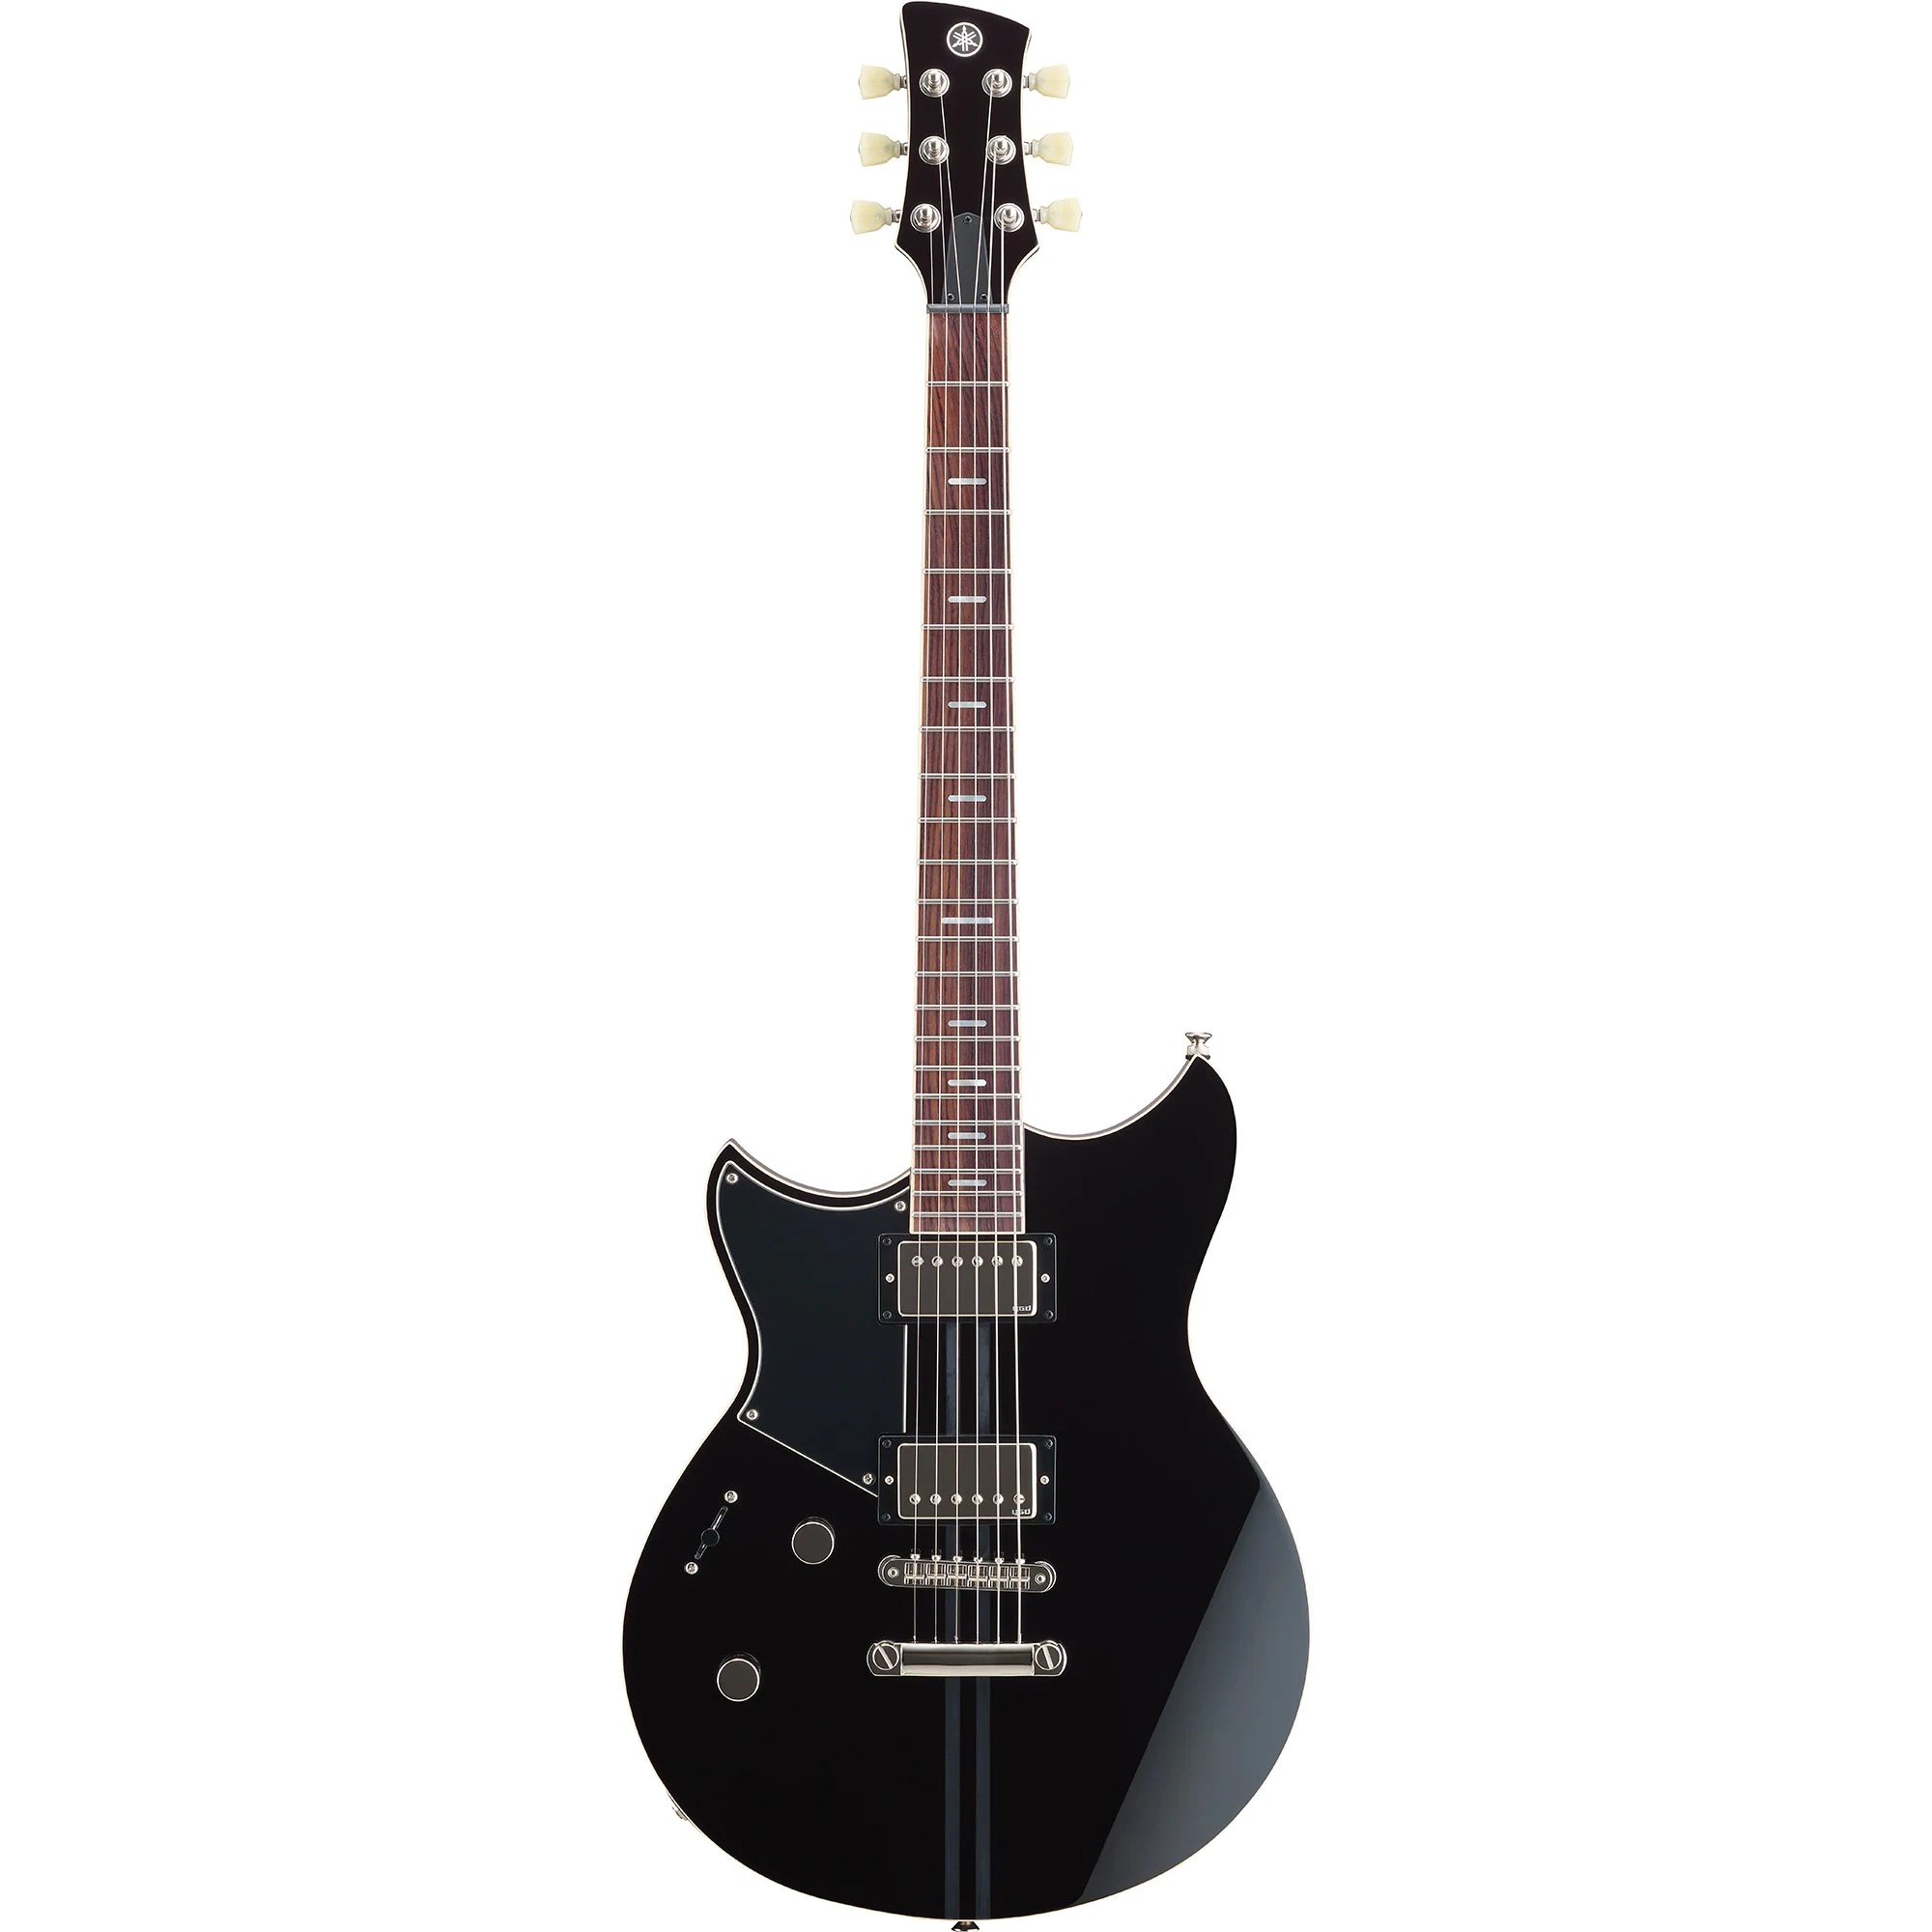 Yamaha RSS20L 6-String Left Handed Solid Body Electric Guitar - Black for sale